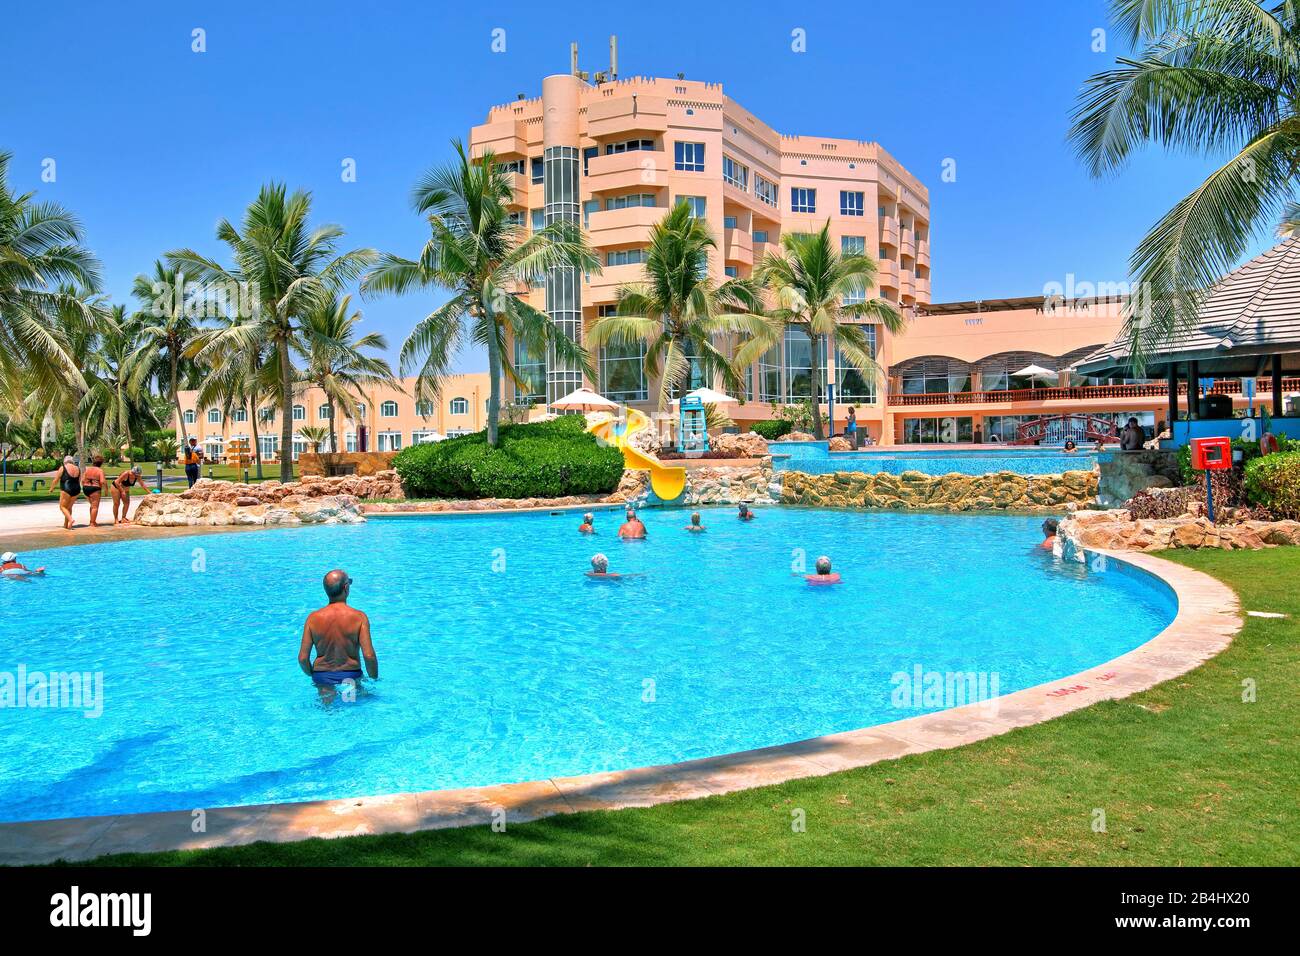 Hôtel complexe Crowne Plaza avec piscine, Salalah, mer d'Oman Banque D'Images